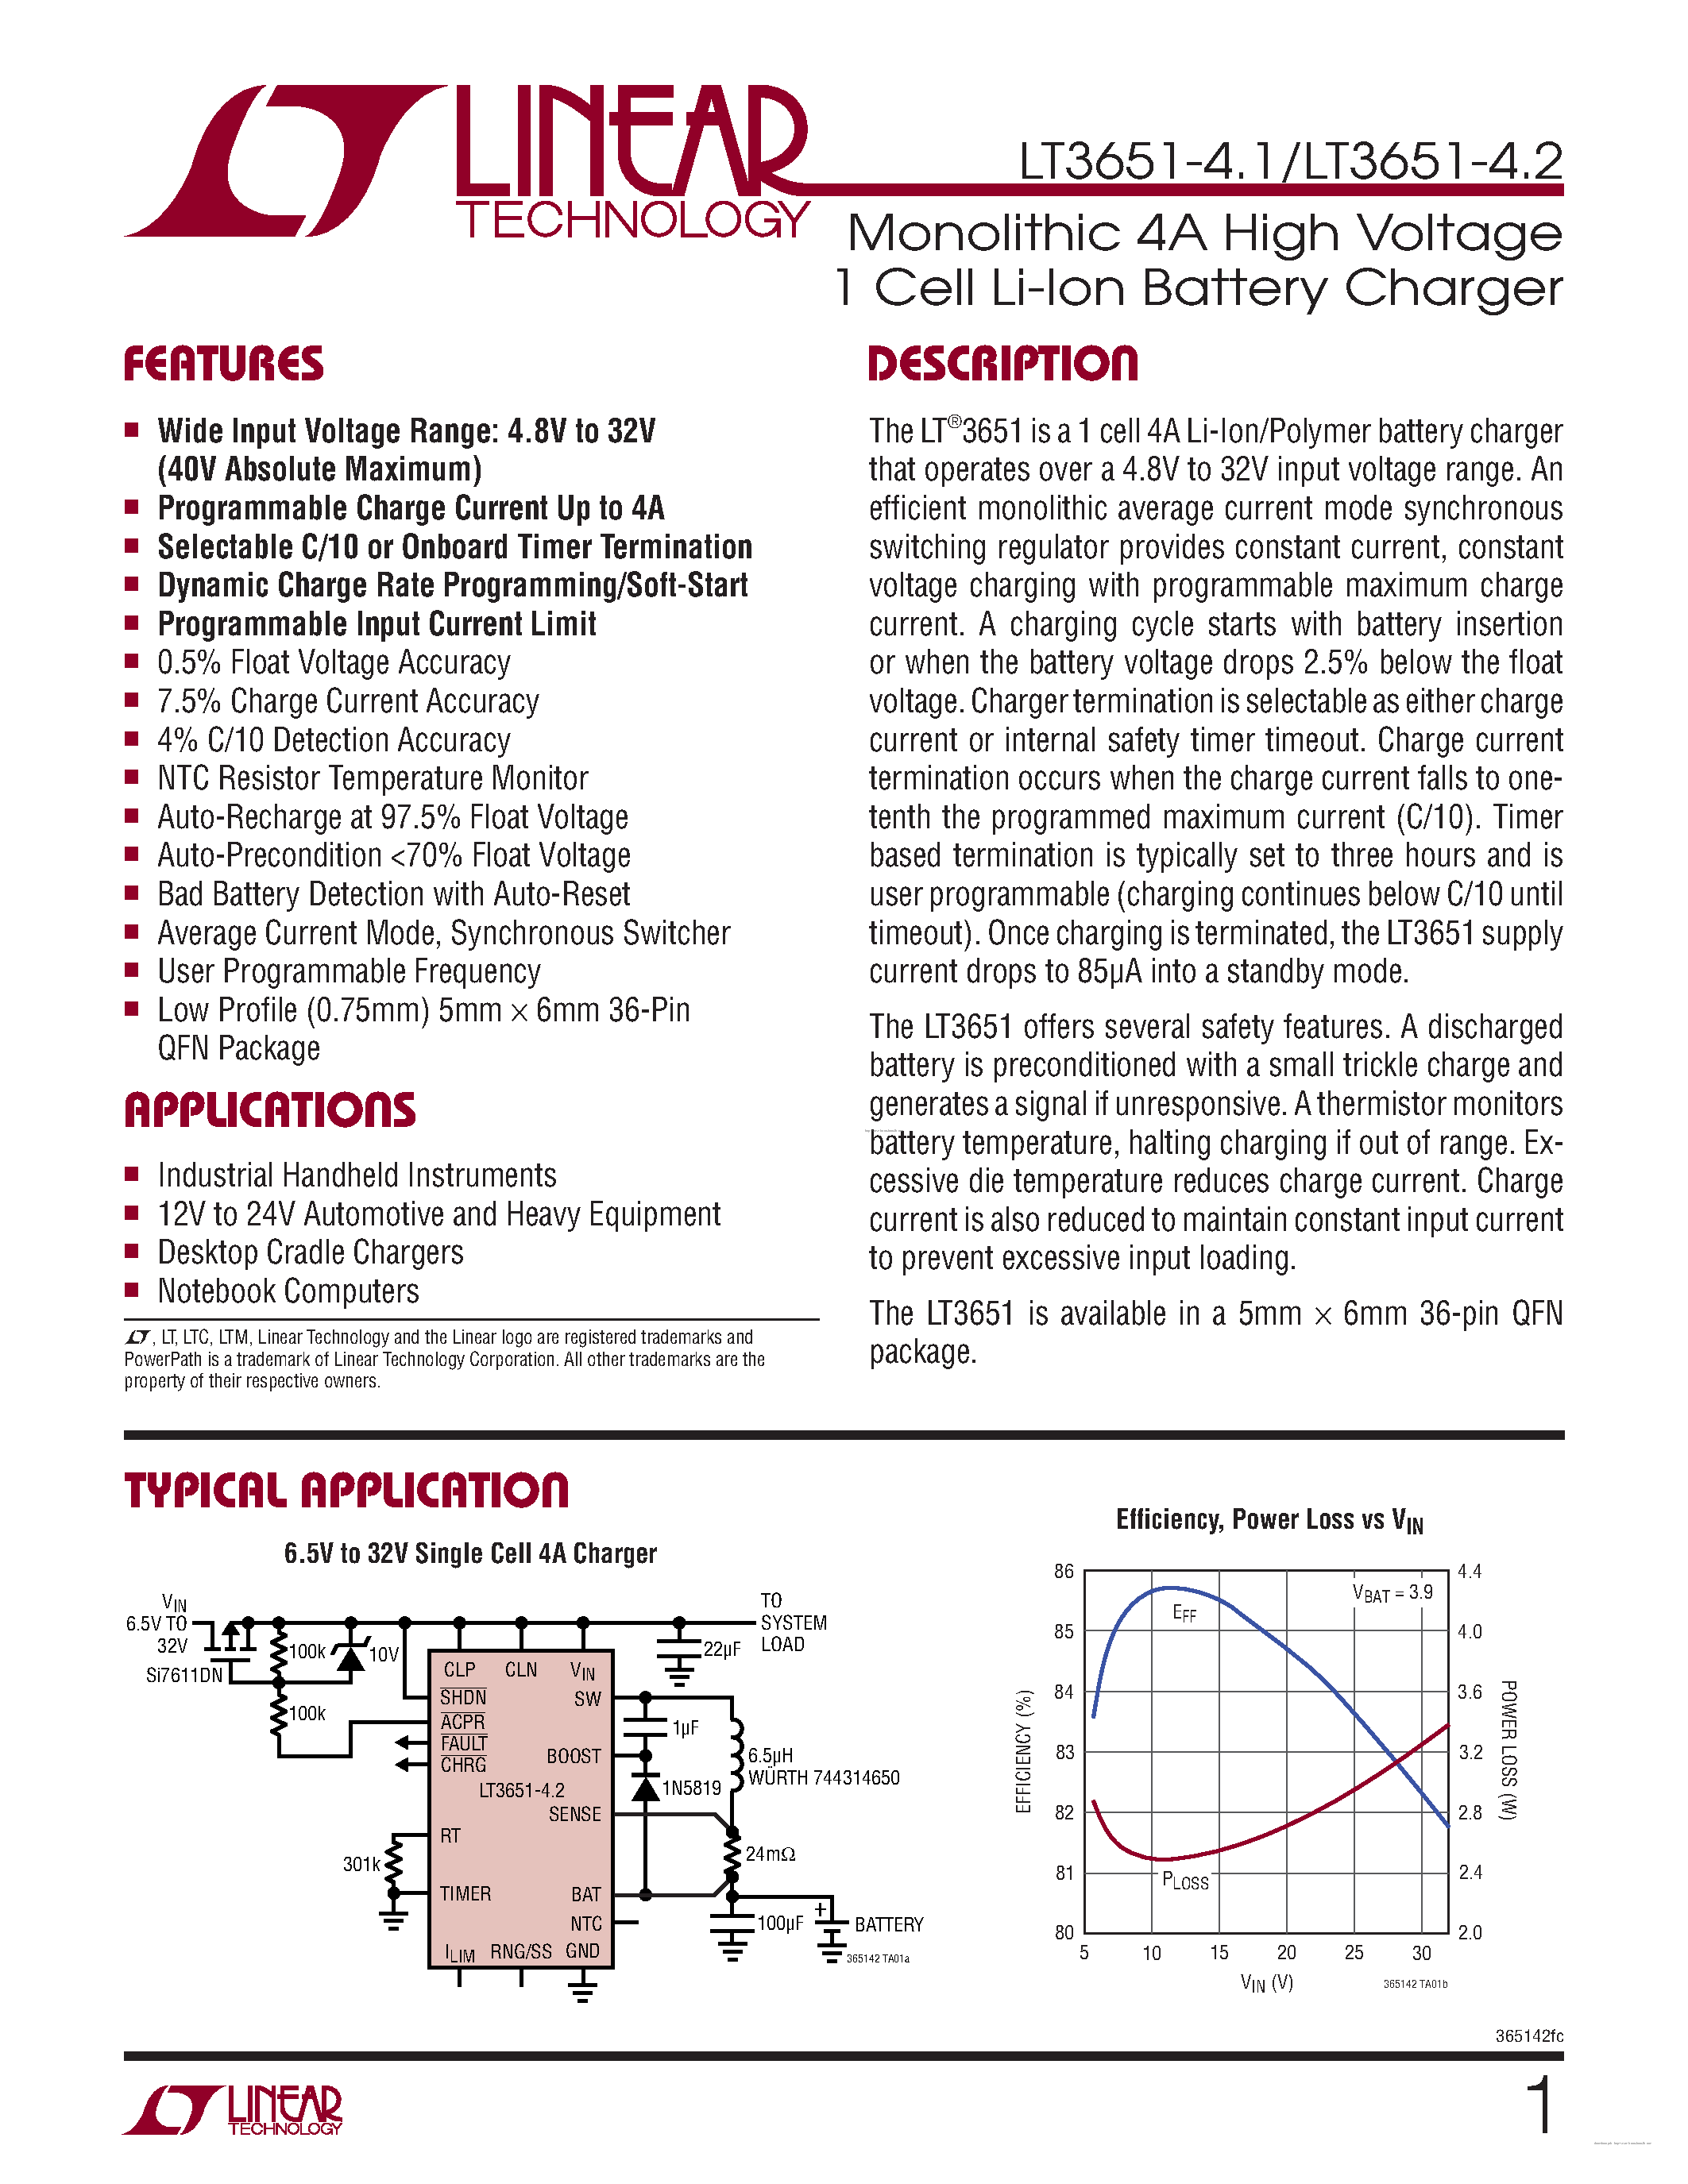 Даташит LT3651-4.1-(LT3651-4.1 / LT3651-4.2) Monolithic 4A High Voltage Li-Ion Battery Charger страница 1